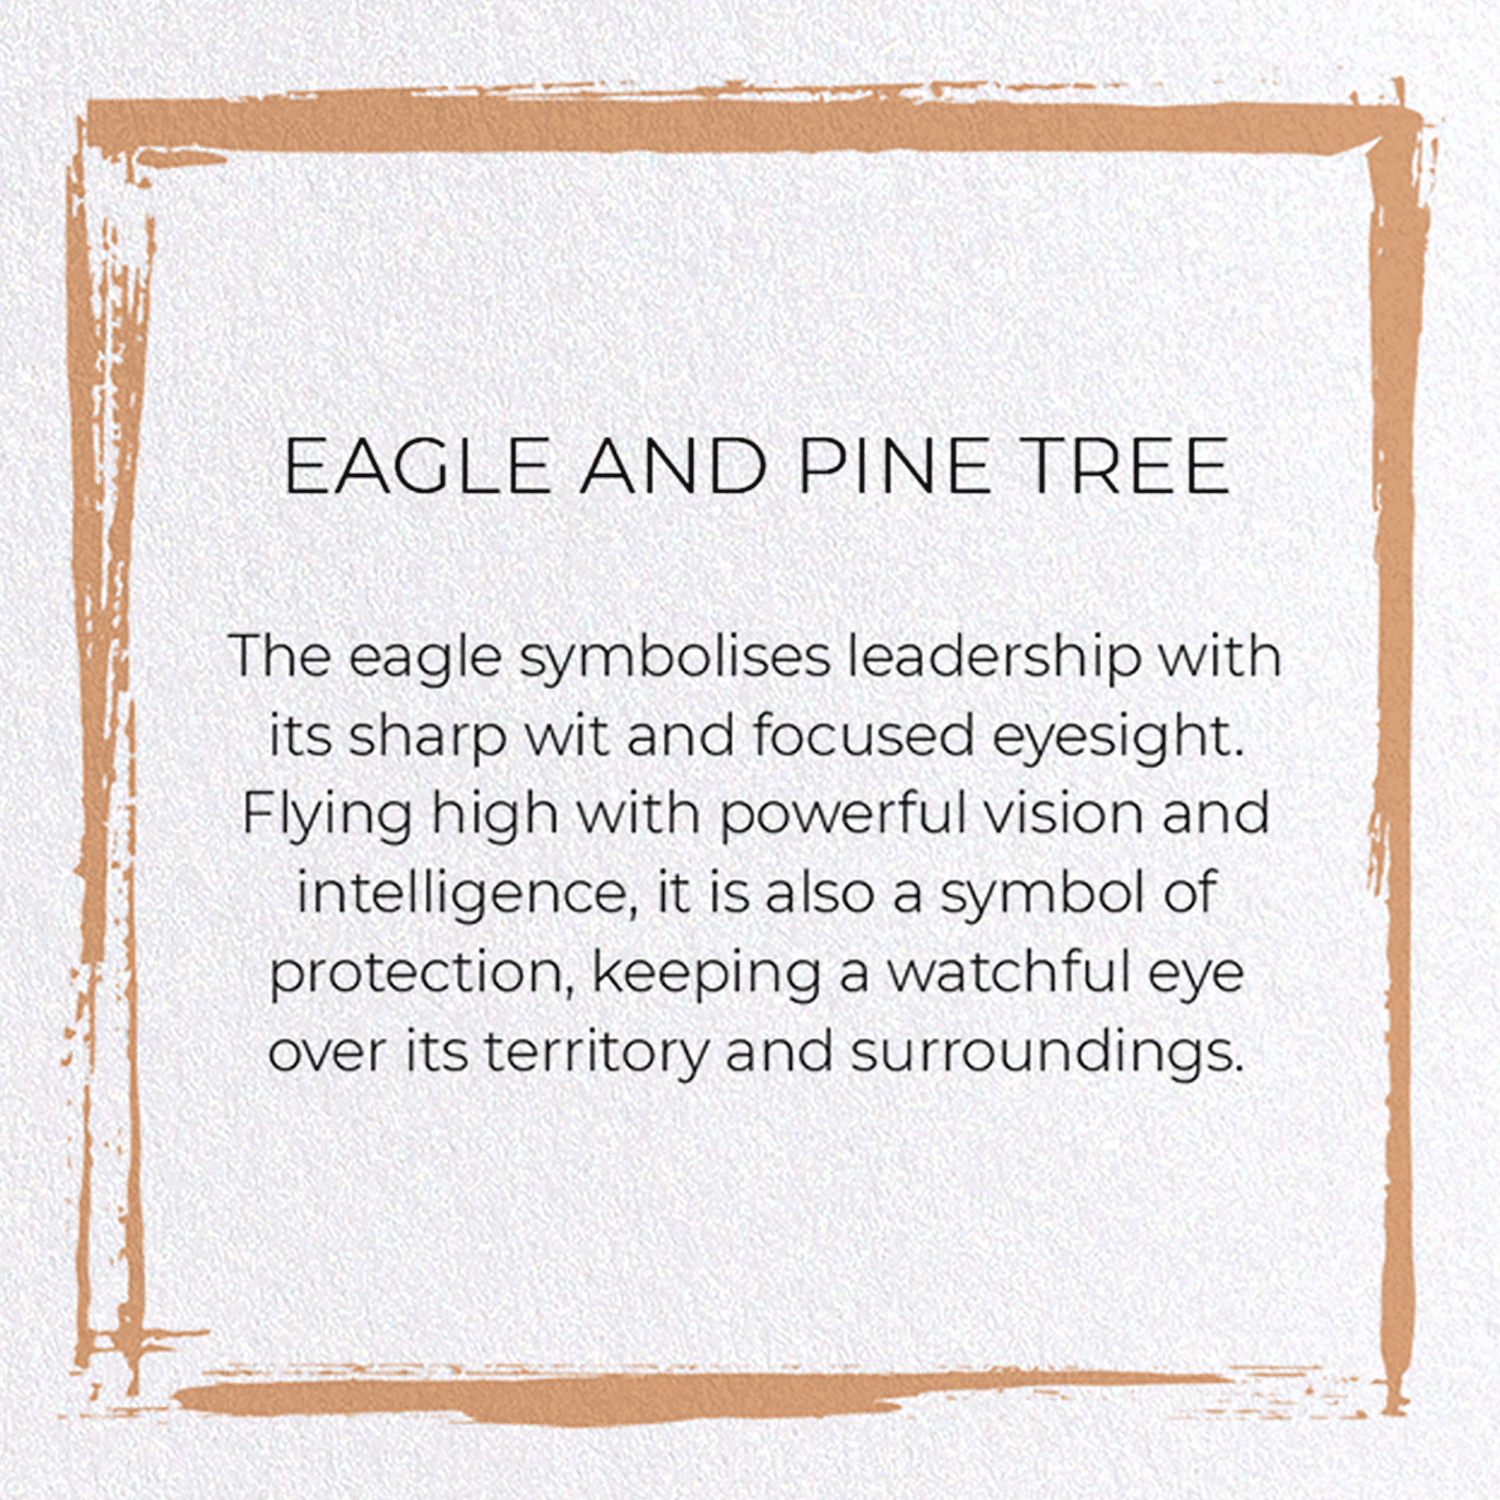 EAGLE AND PINE TREE